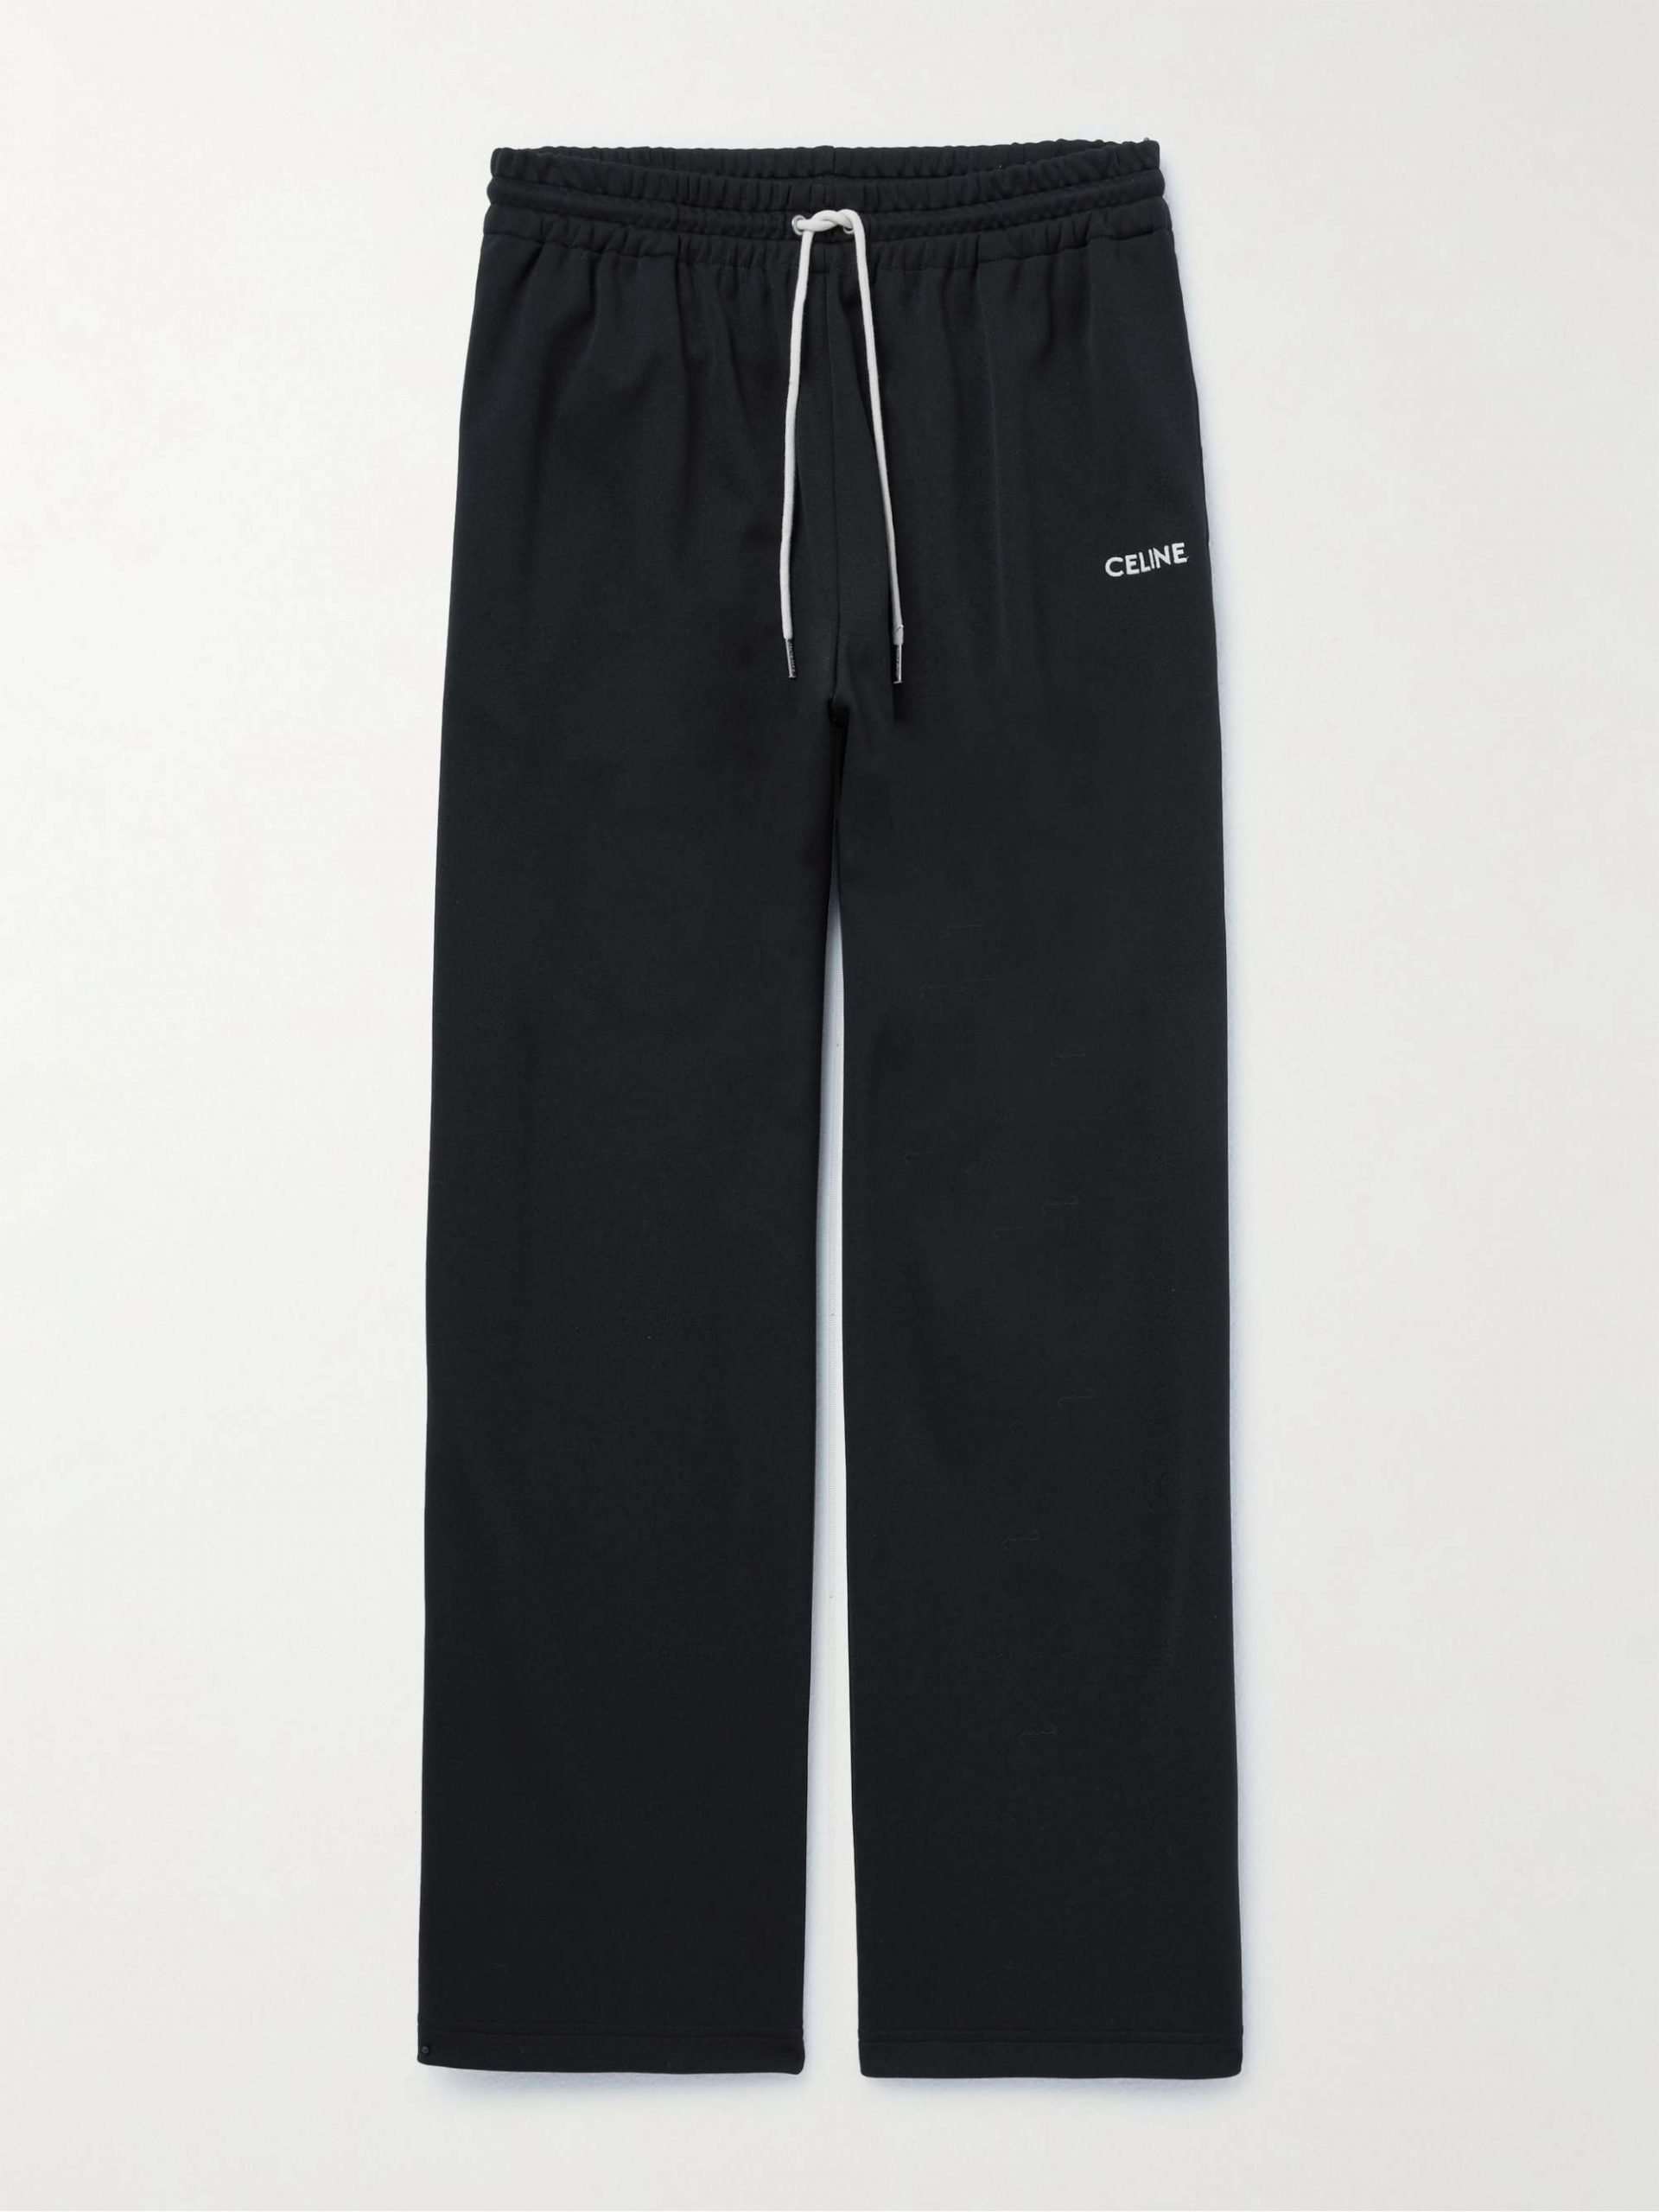 CELINE HOMME Straight-Leg Logo-Embroidered Jersey Sweatpants for Men